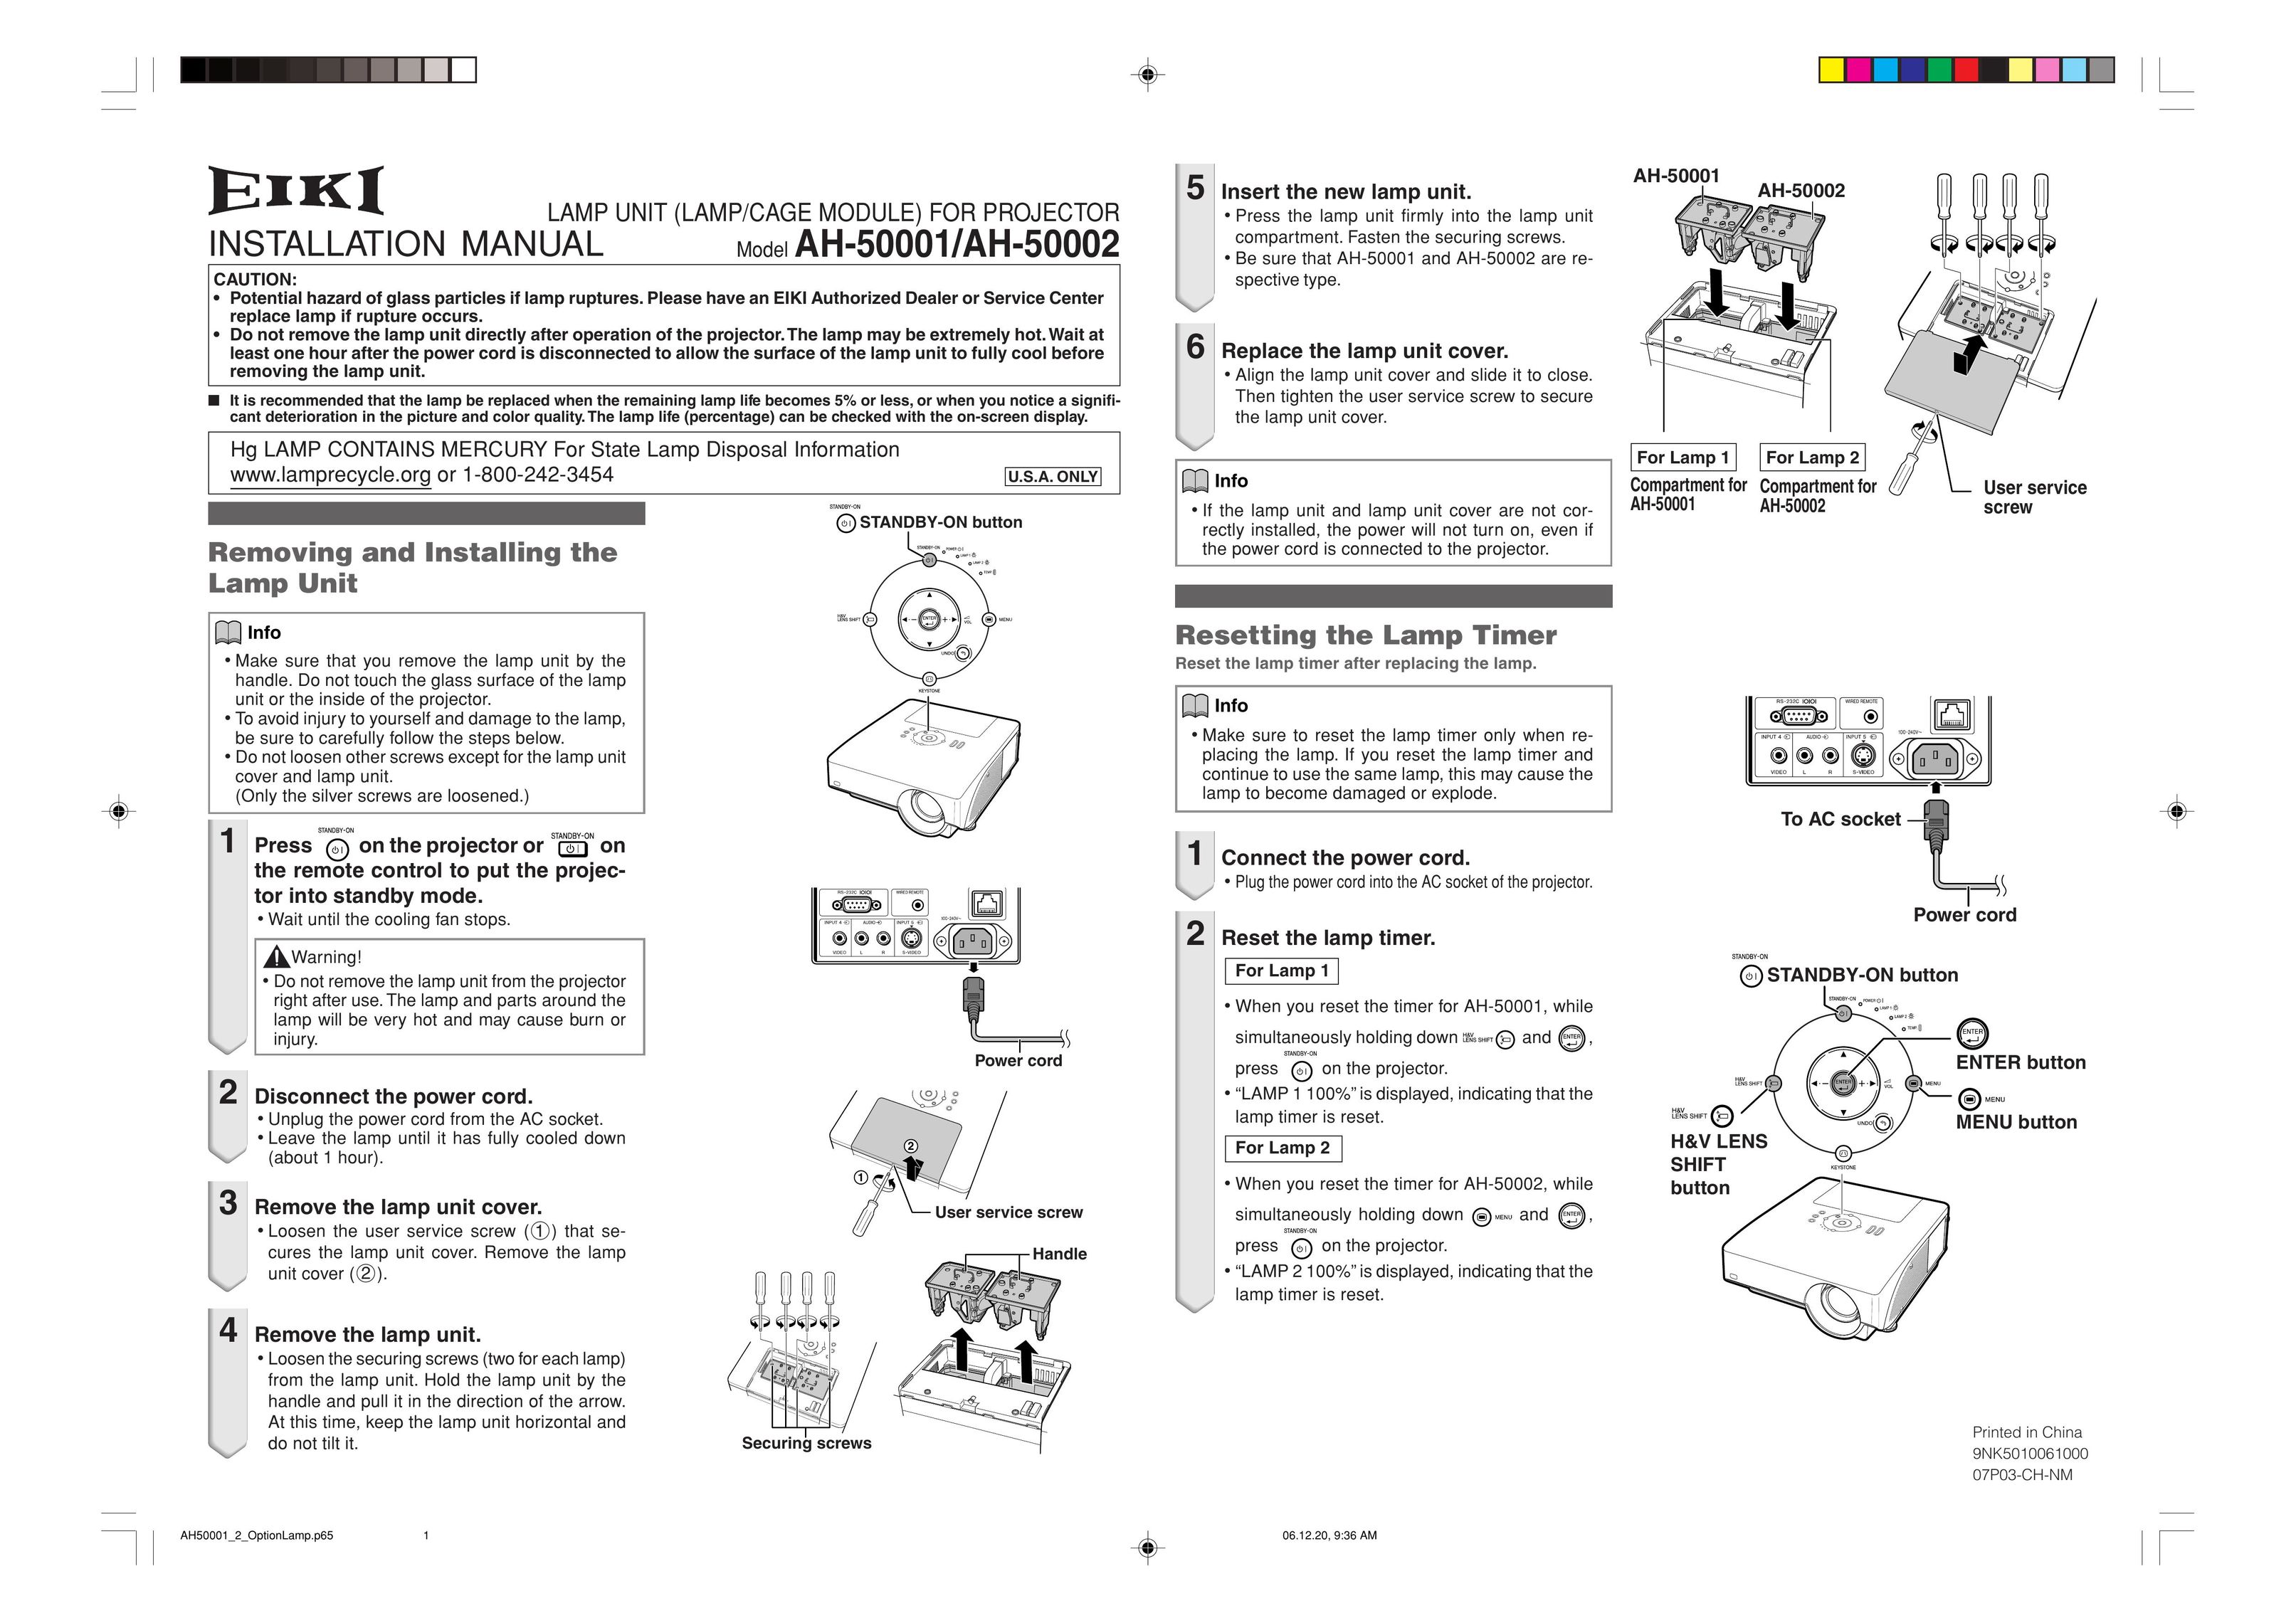 Eiki AH-50002 Projector User Manual